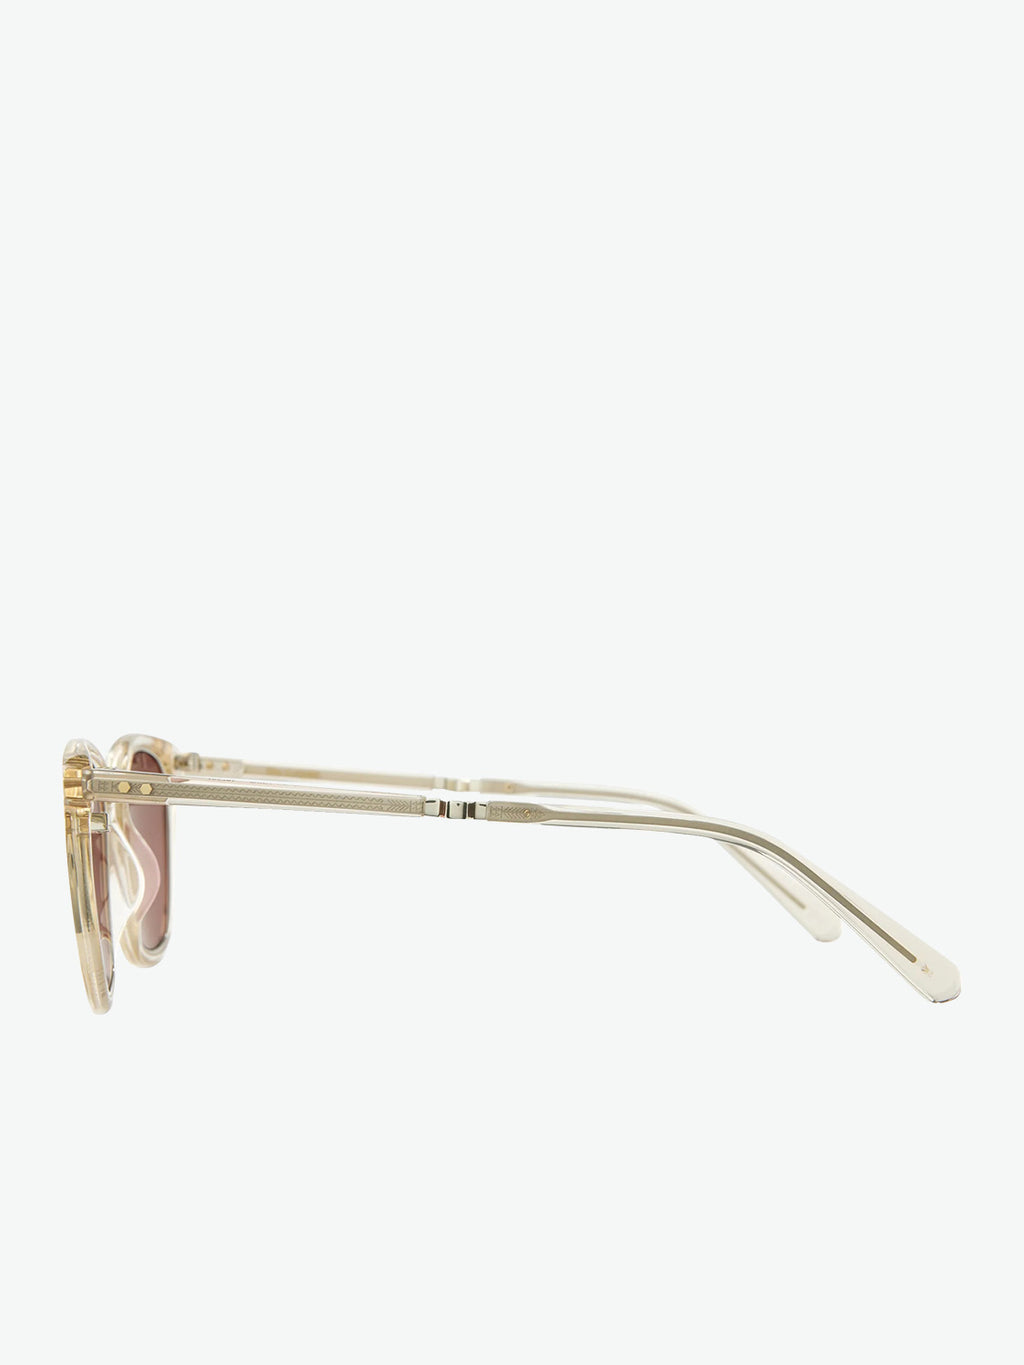 Mr. Leight Getty II S Chandelier Sunglasses